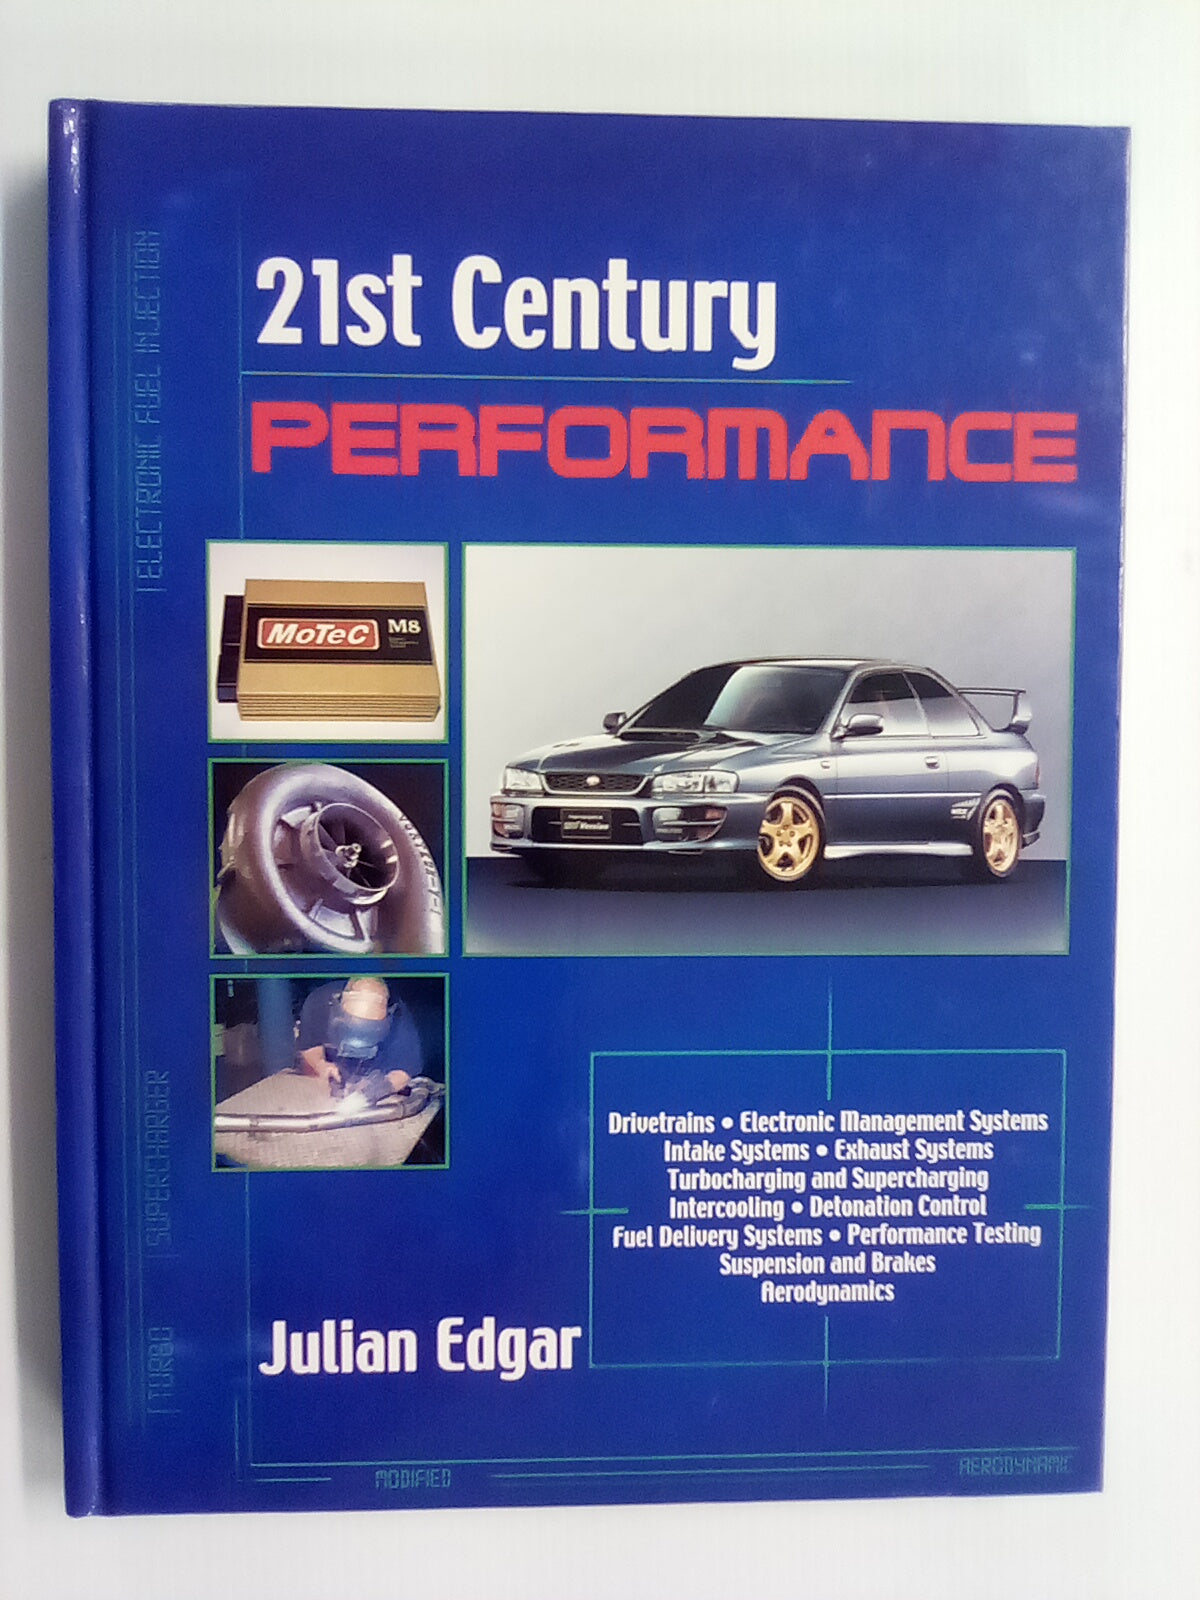 21st Century Performance by Julian Edgar